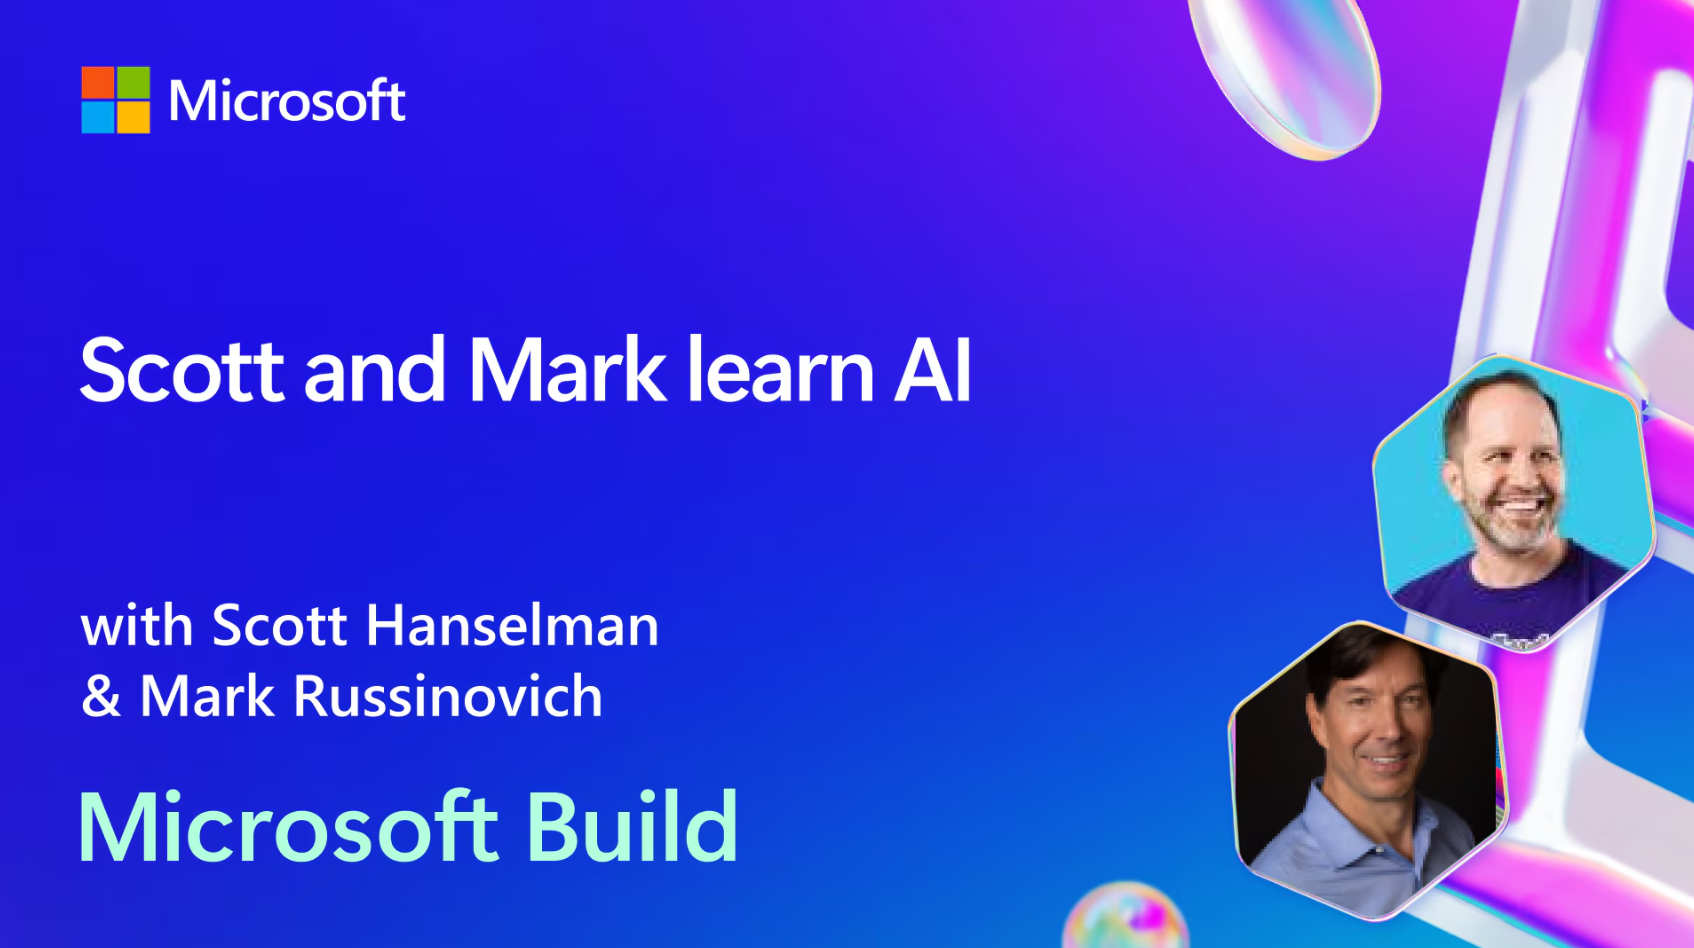 Scott and Mark learn AI